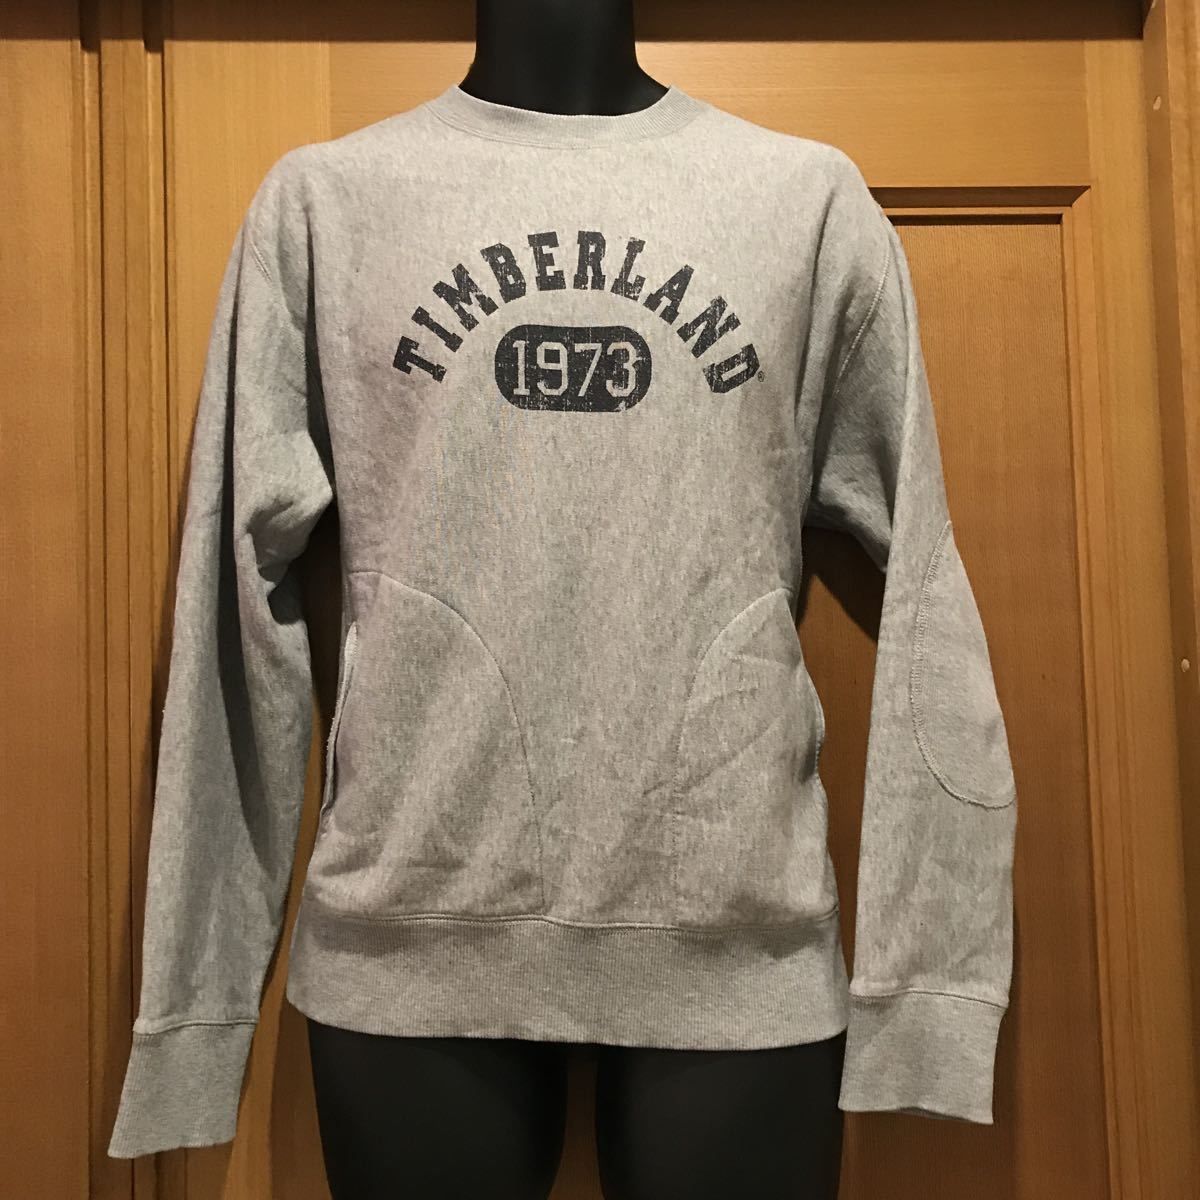  Timberland мужской тренировочный футболка серый TIMBERLAND USA для поиска Polo GAP Tommy Champion 